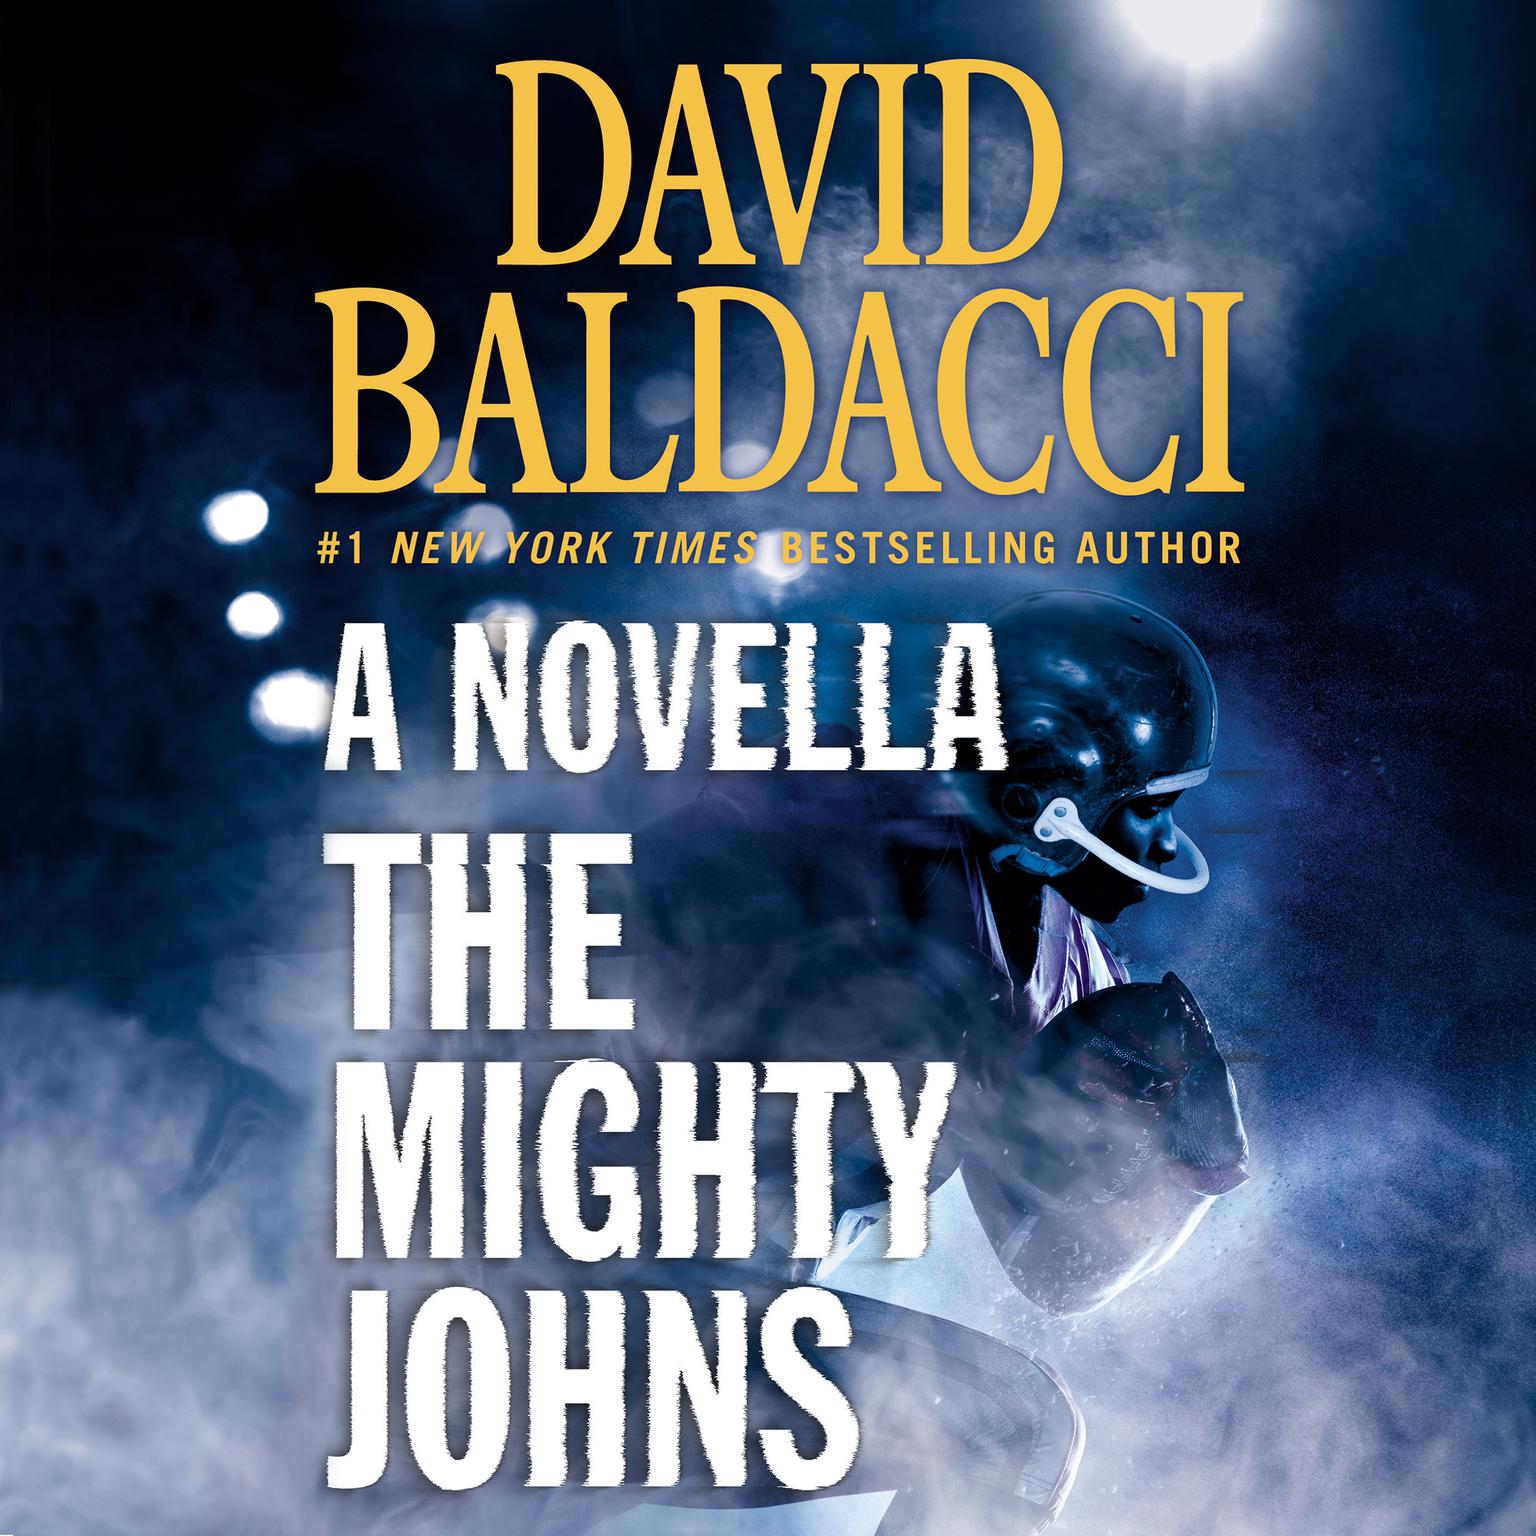 The Mighty Johns: A Novella Audiobook, by David Baldacci